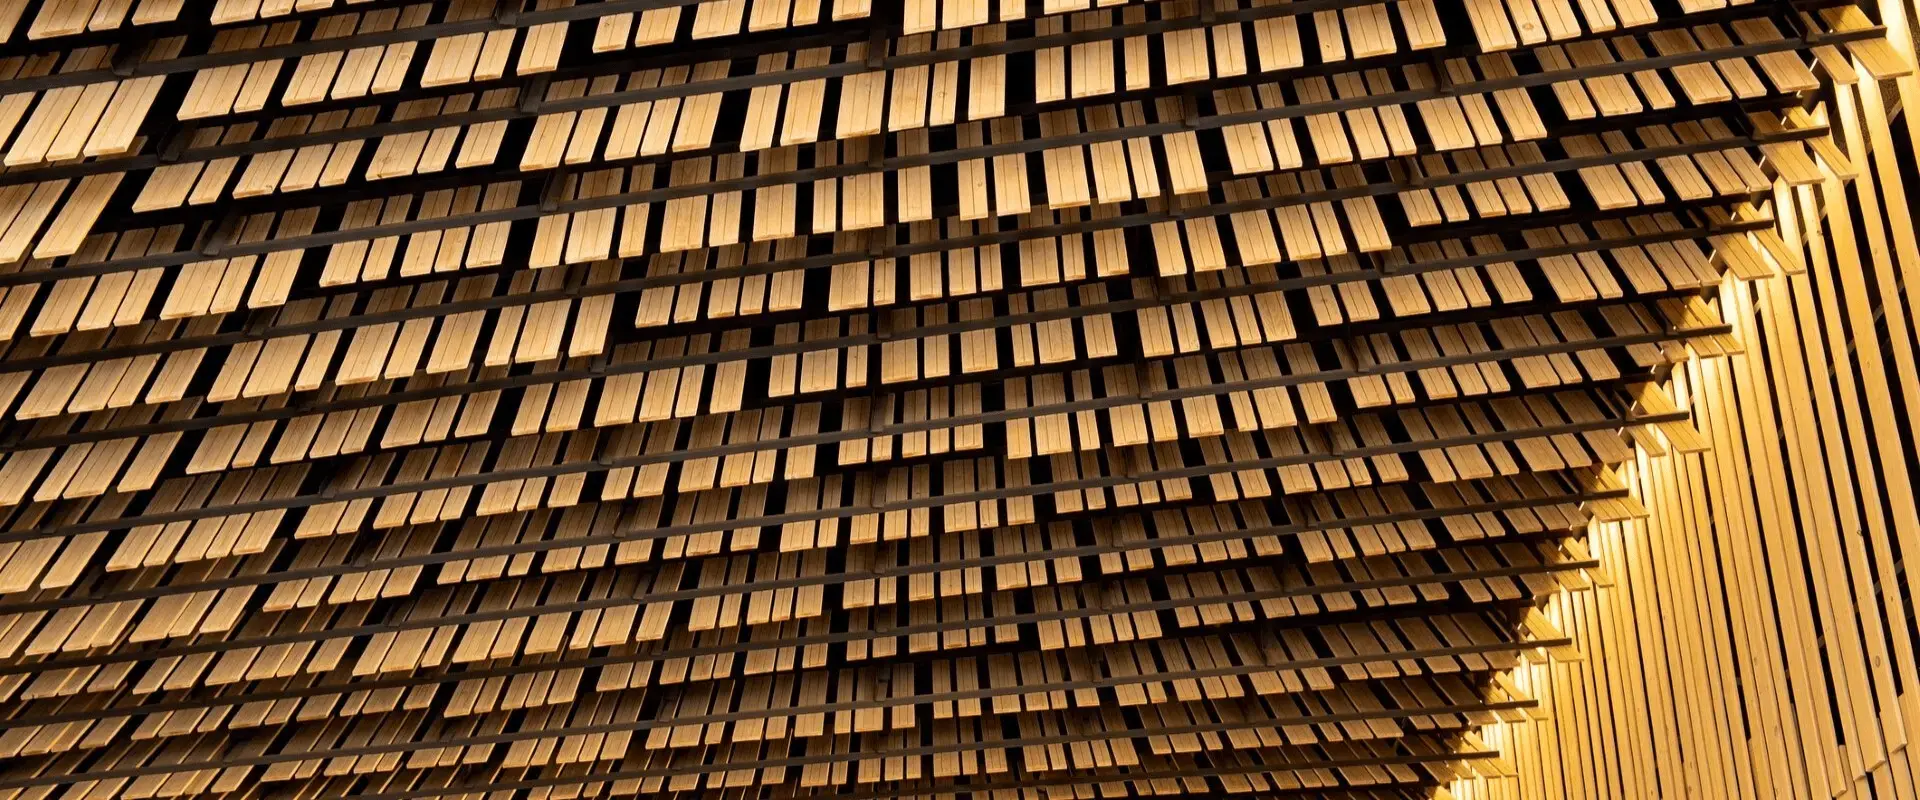 Cedar wood walls of the building designed by Kengo Kuma